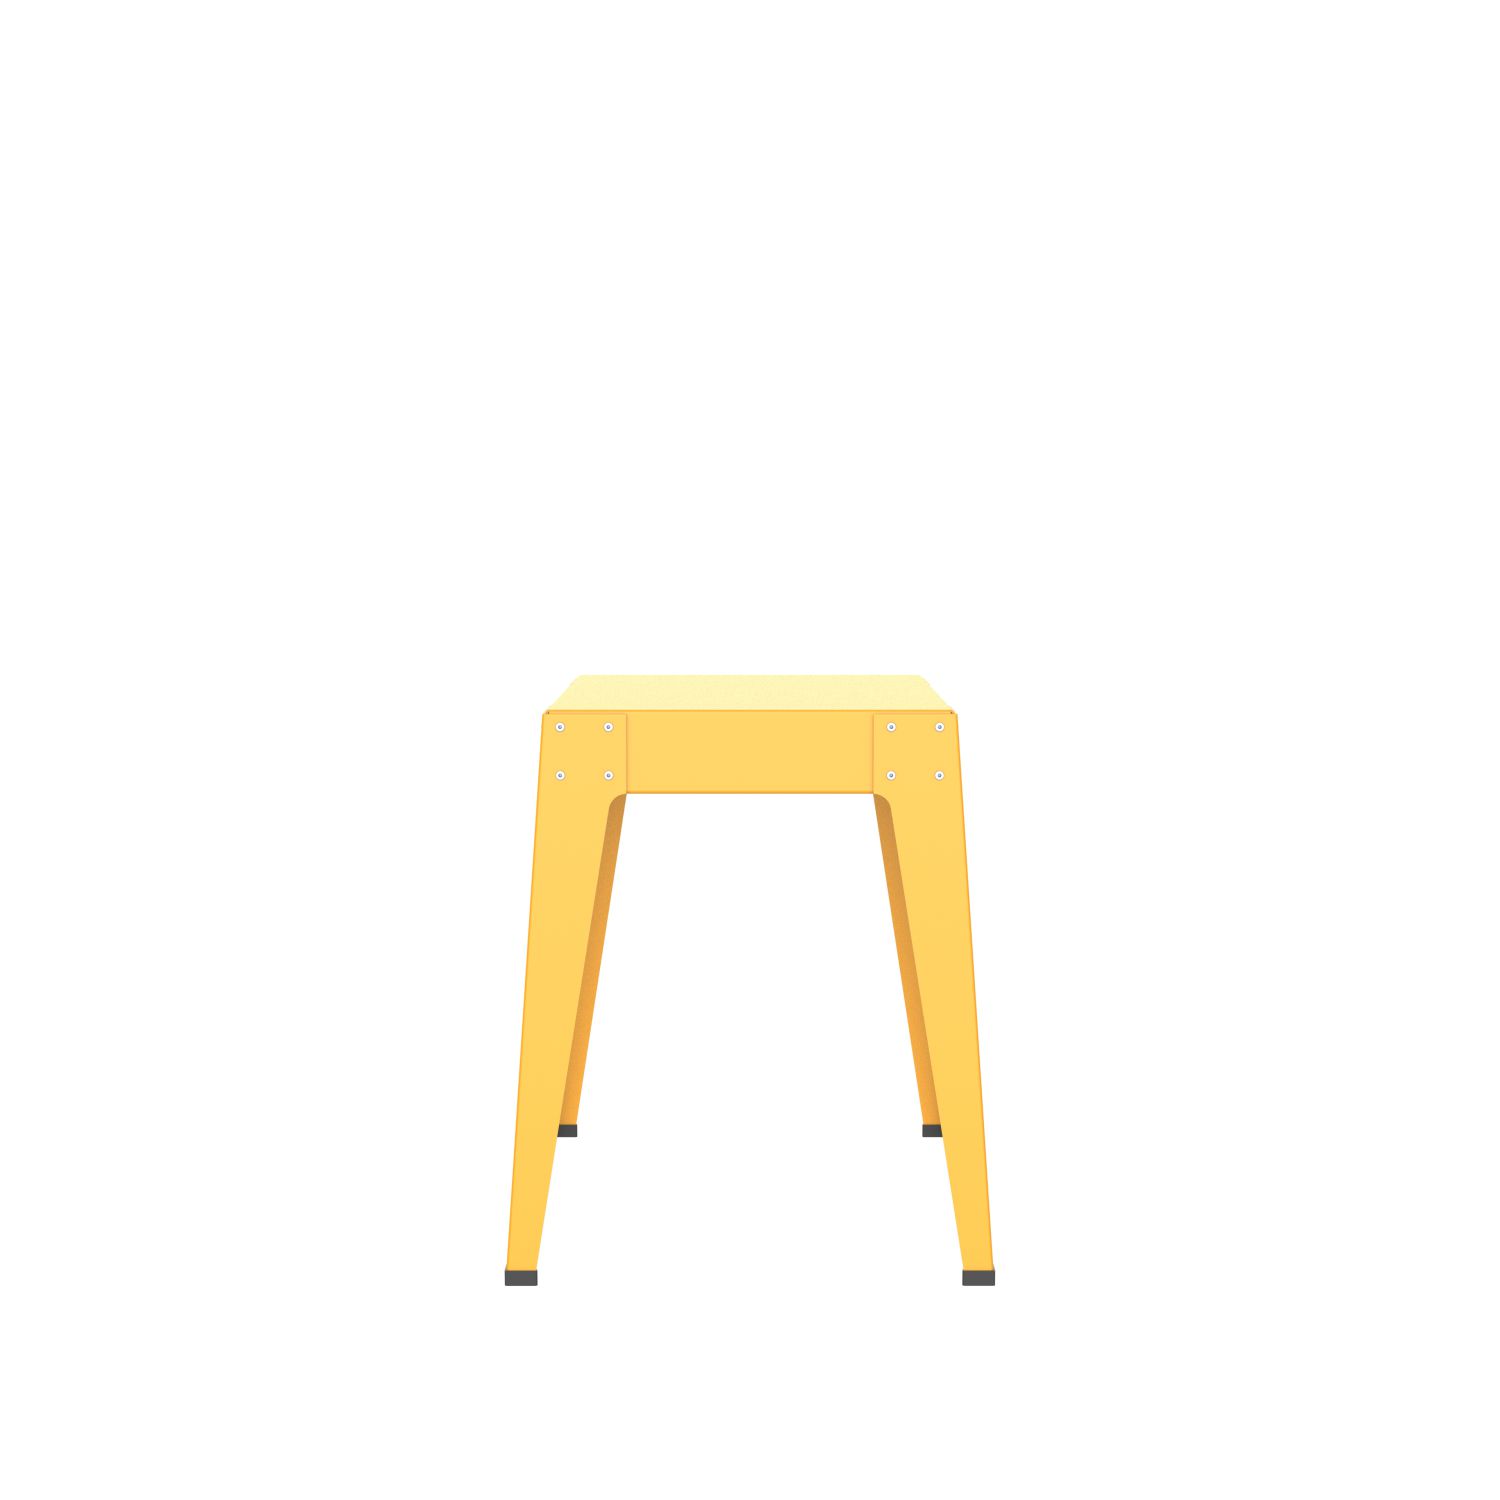 lensvelt piet hein eek aluminium series stool signal yellow ral1003 hard leg ends